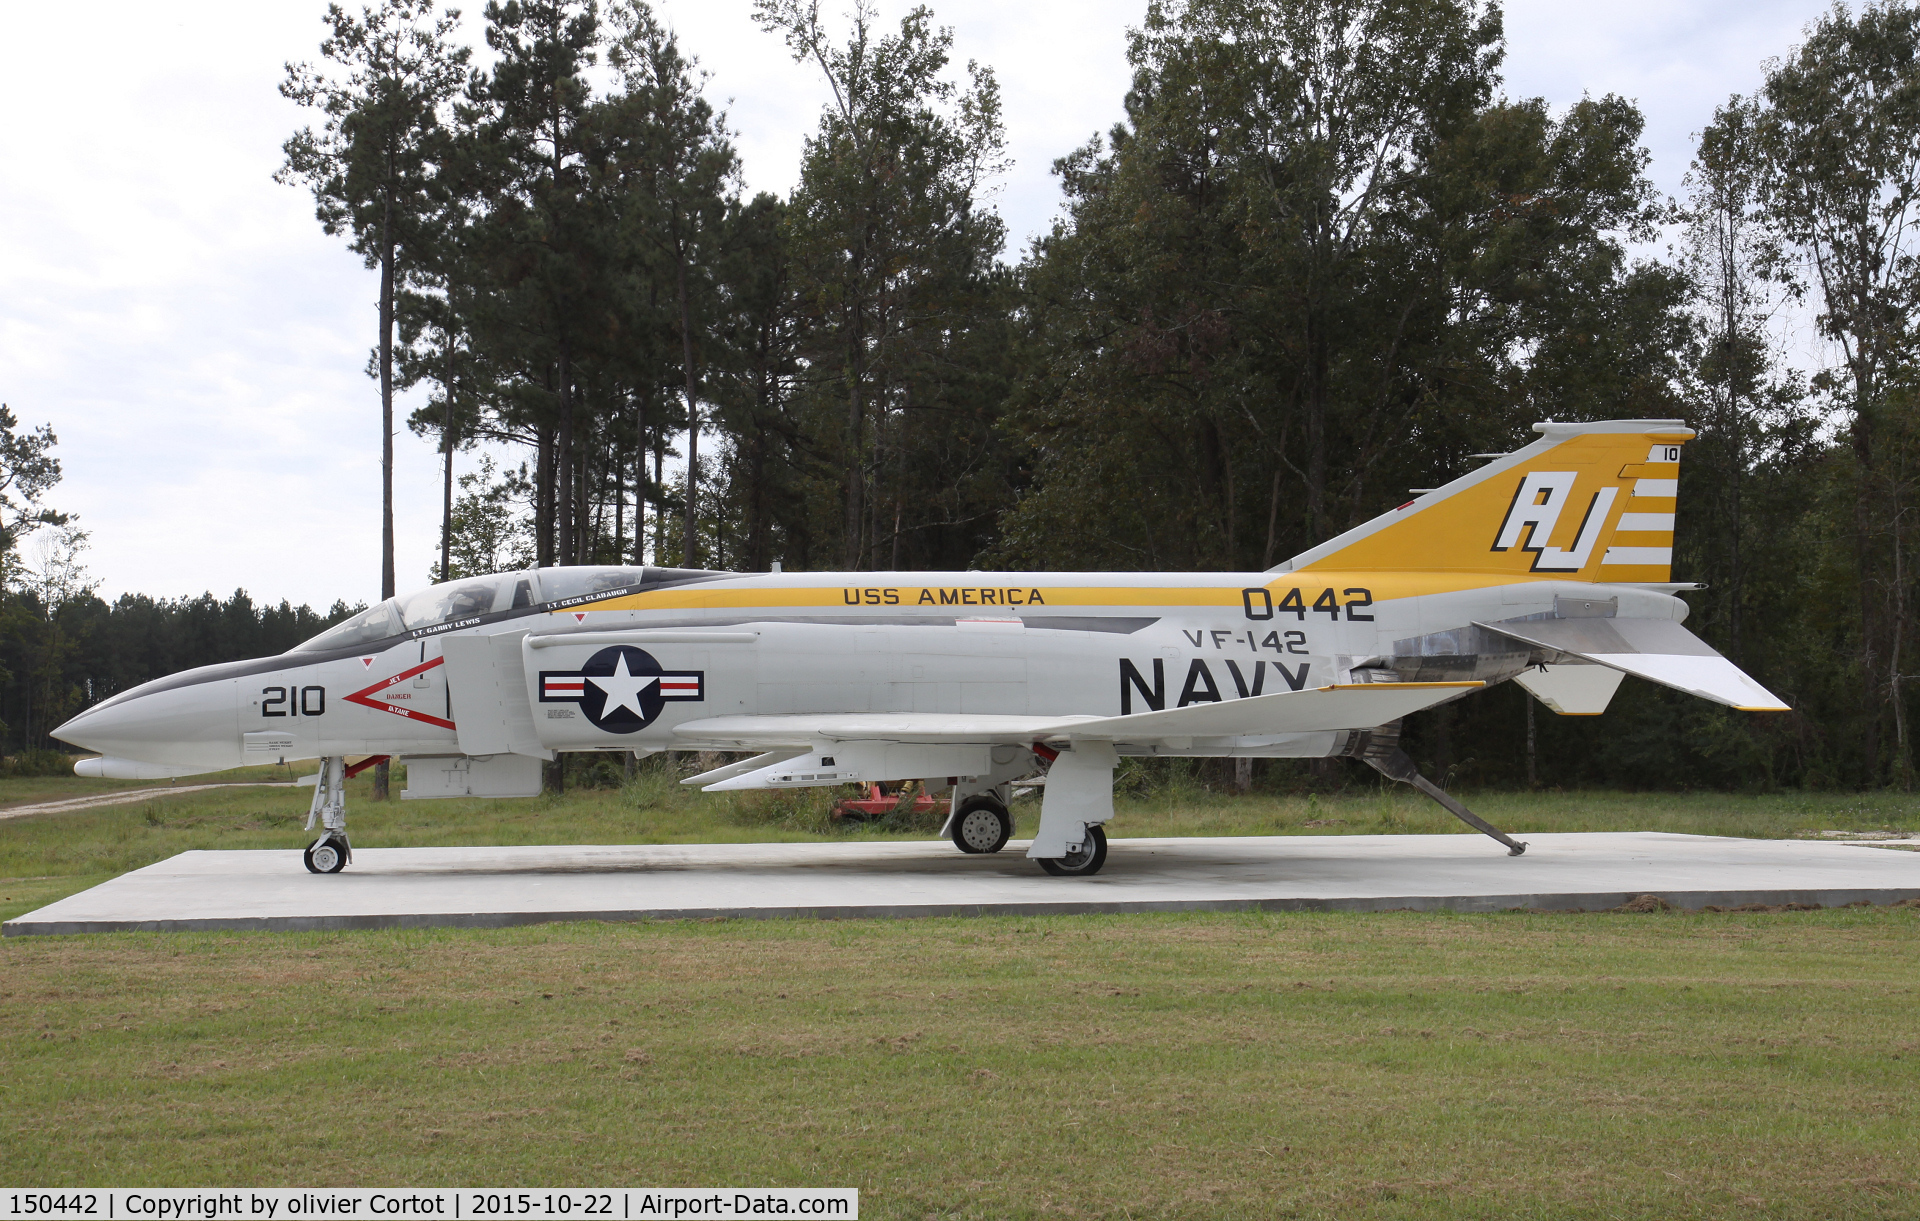 150442, McDonnell F-4N Phantom II C/N 228, other side view